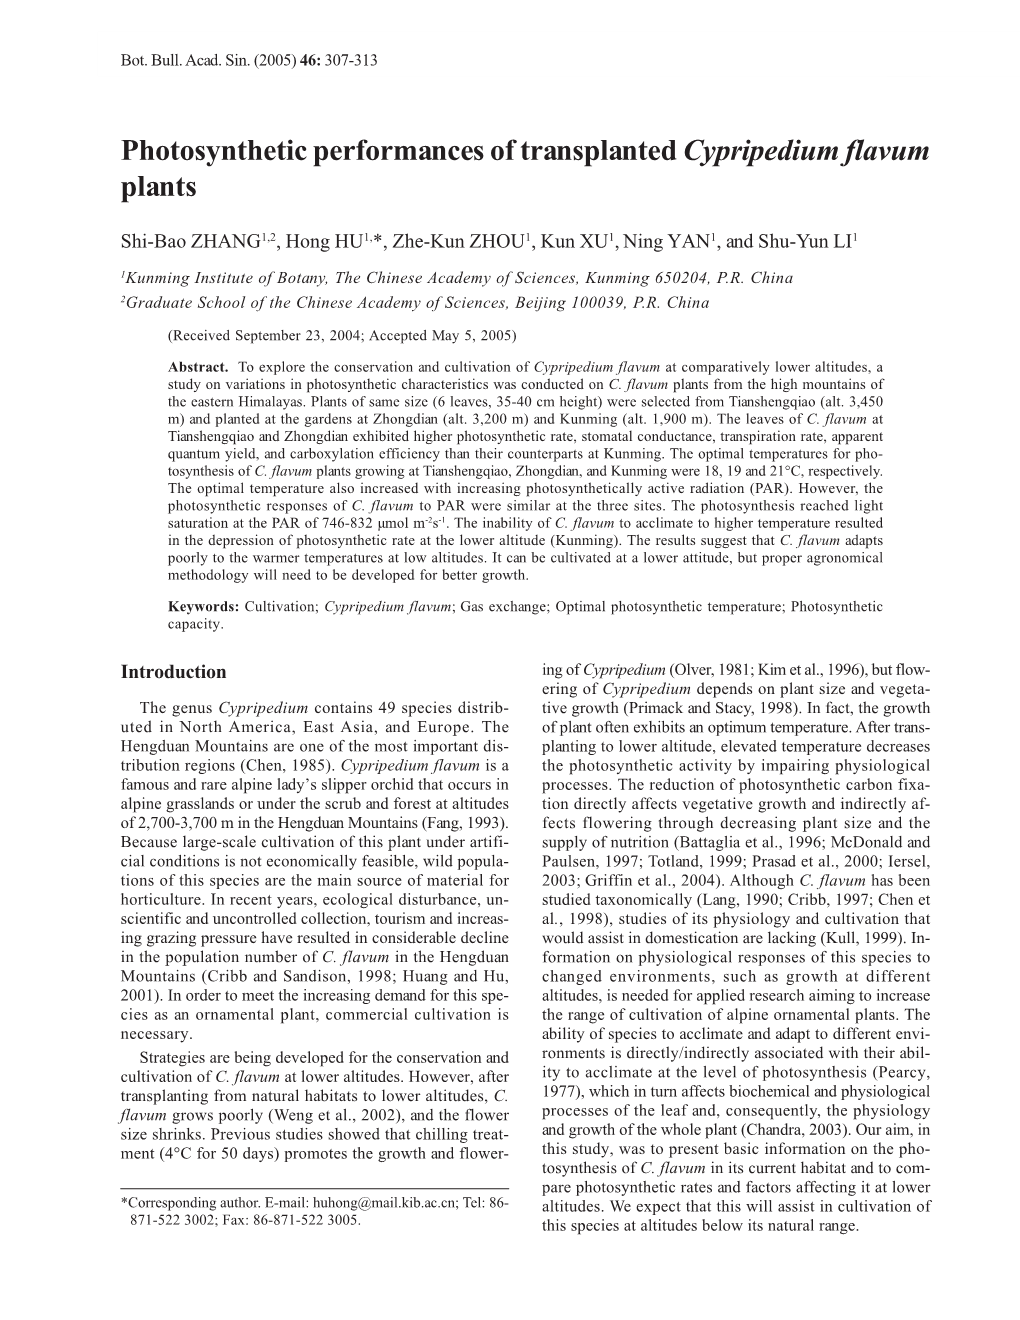 Photosynthetic Performances of Transplanted Cypripedium Flavum Plants